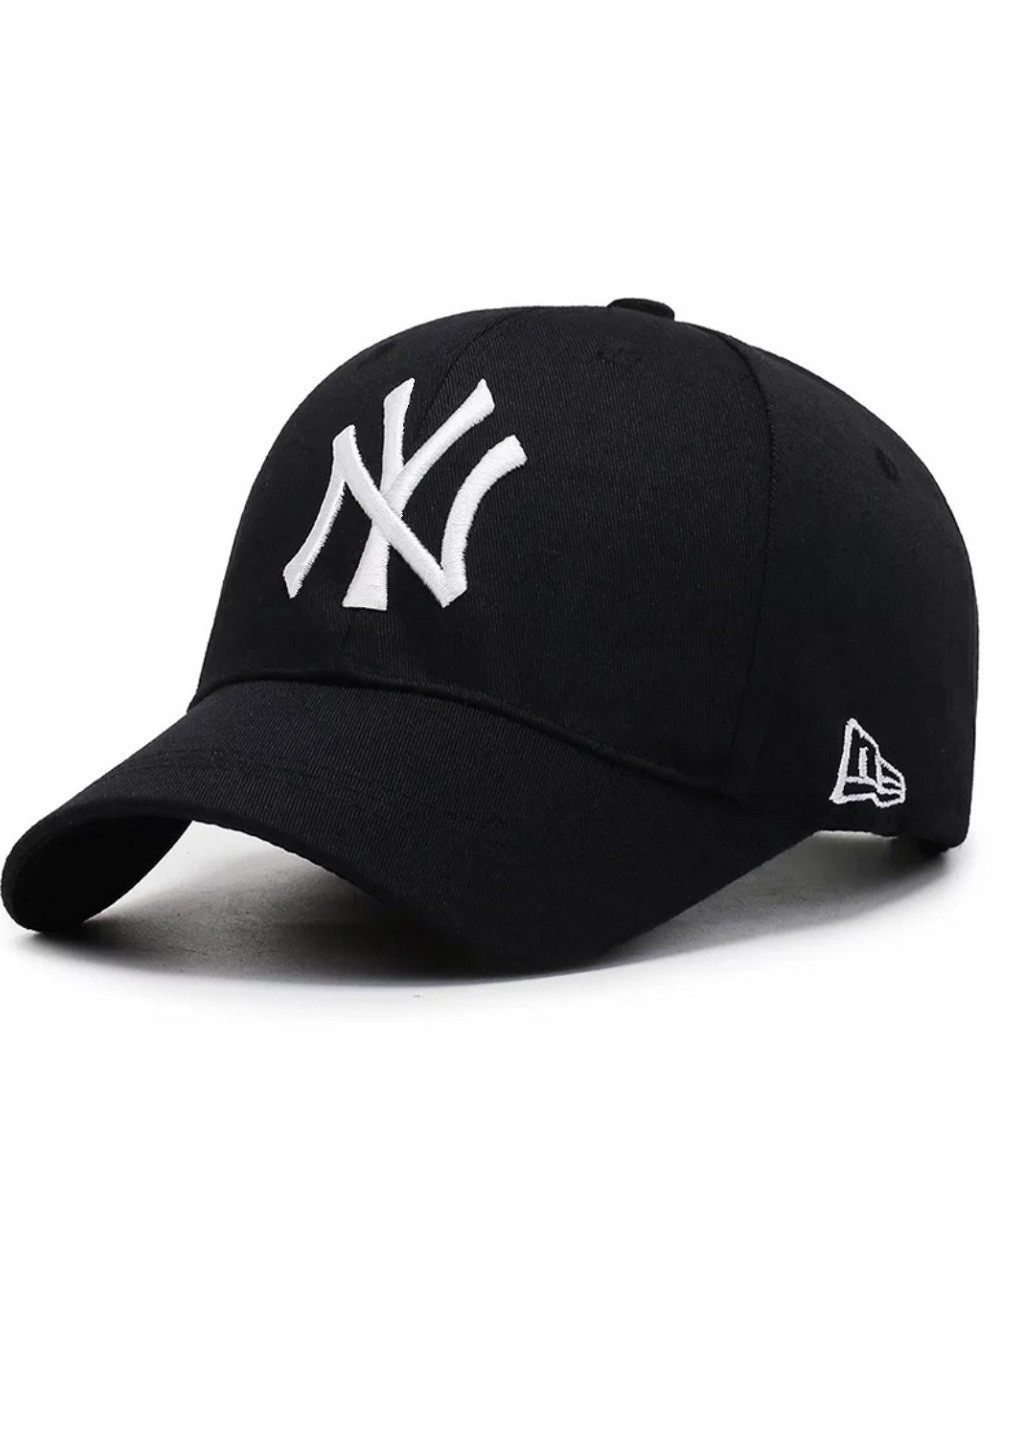 Кепка Бейсболка NY Нью-Йорк (New York) New Era унисекс логотип Белый NoName бейсболка однотонная чёрно-белую кэжуал